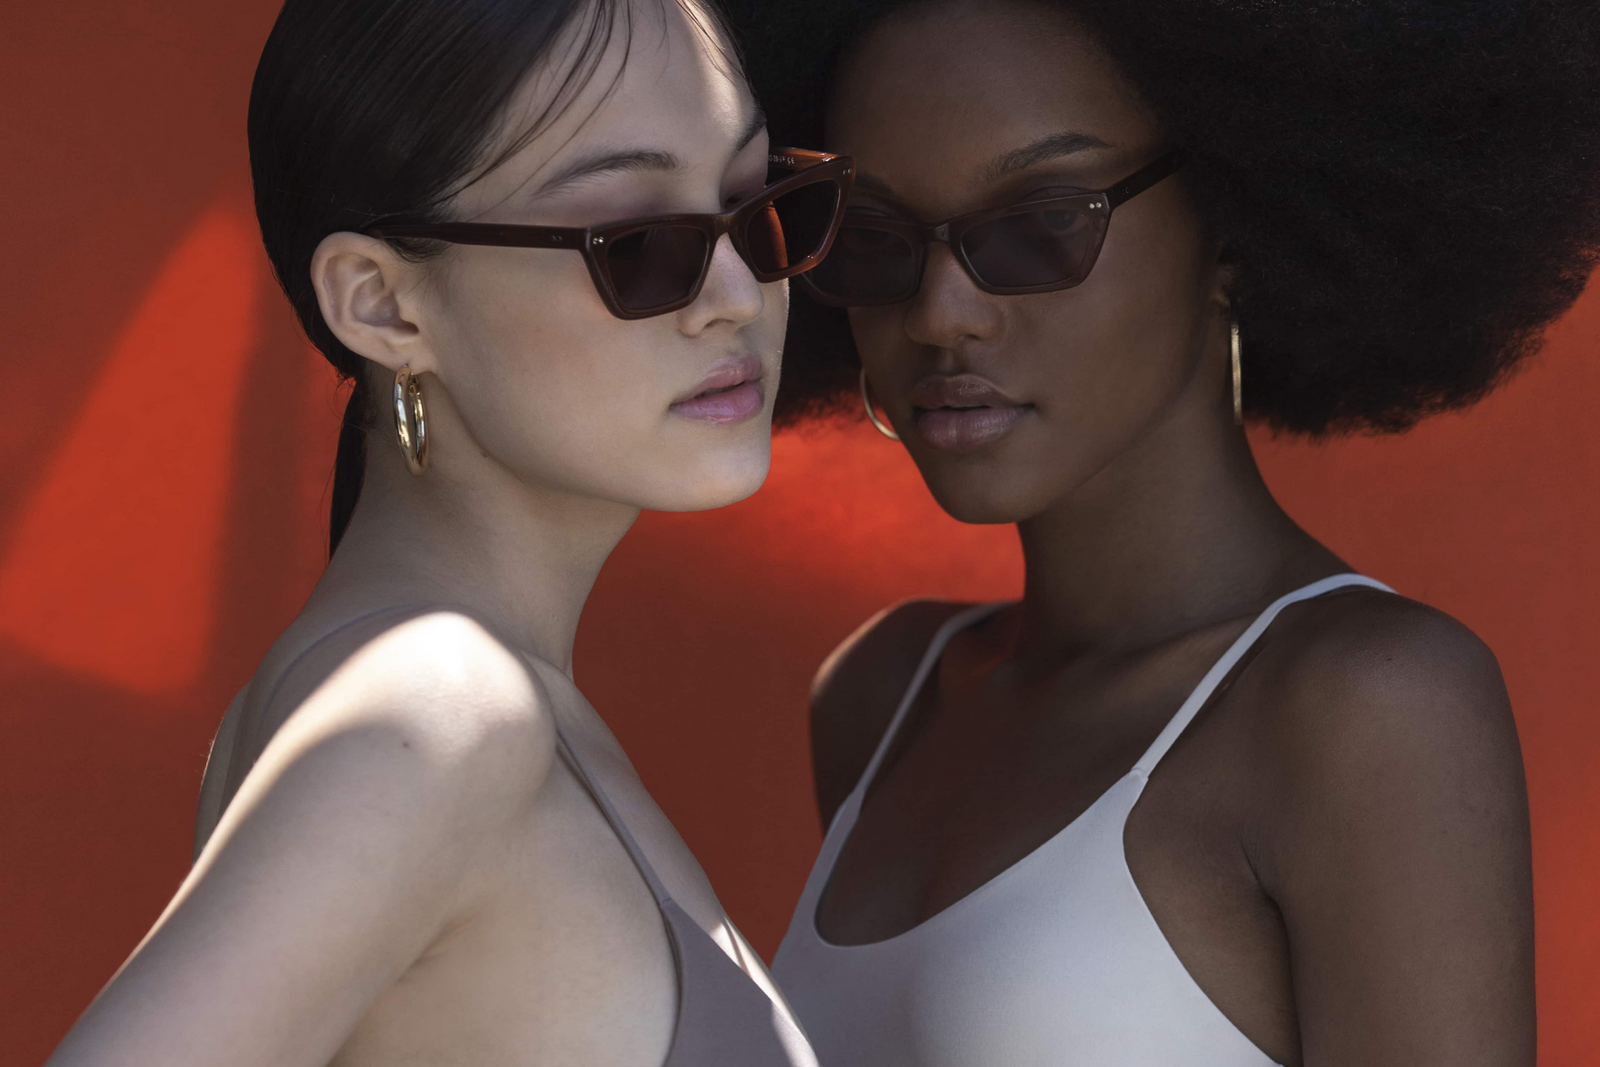 De-sunglasses| beverly collection caramel models